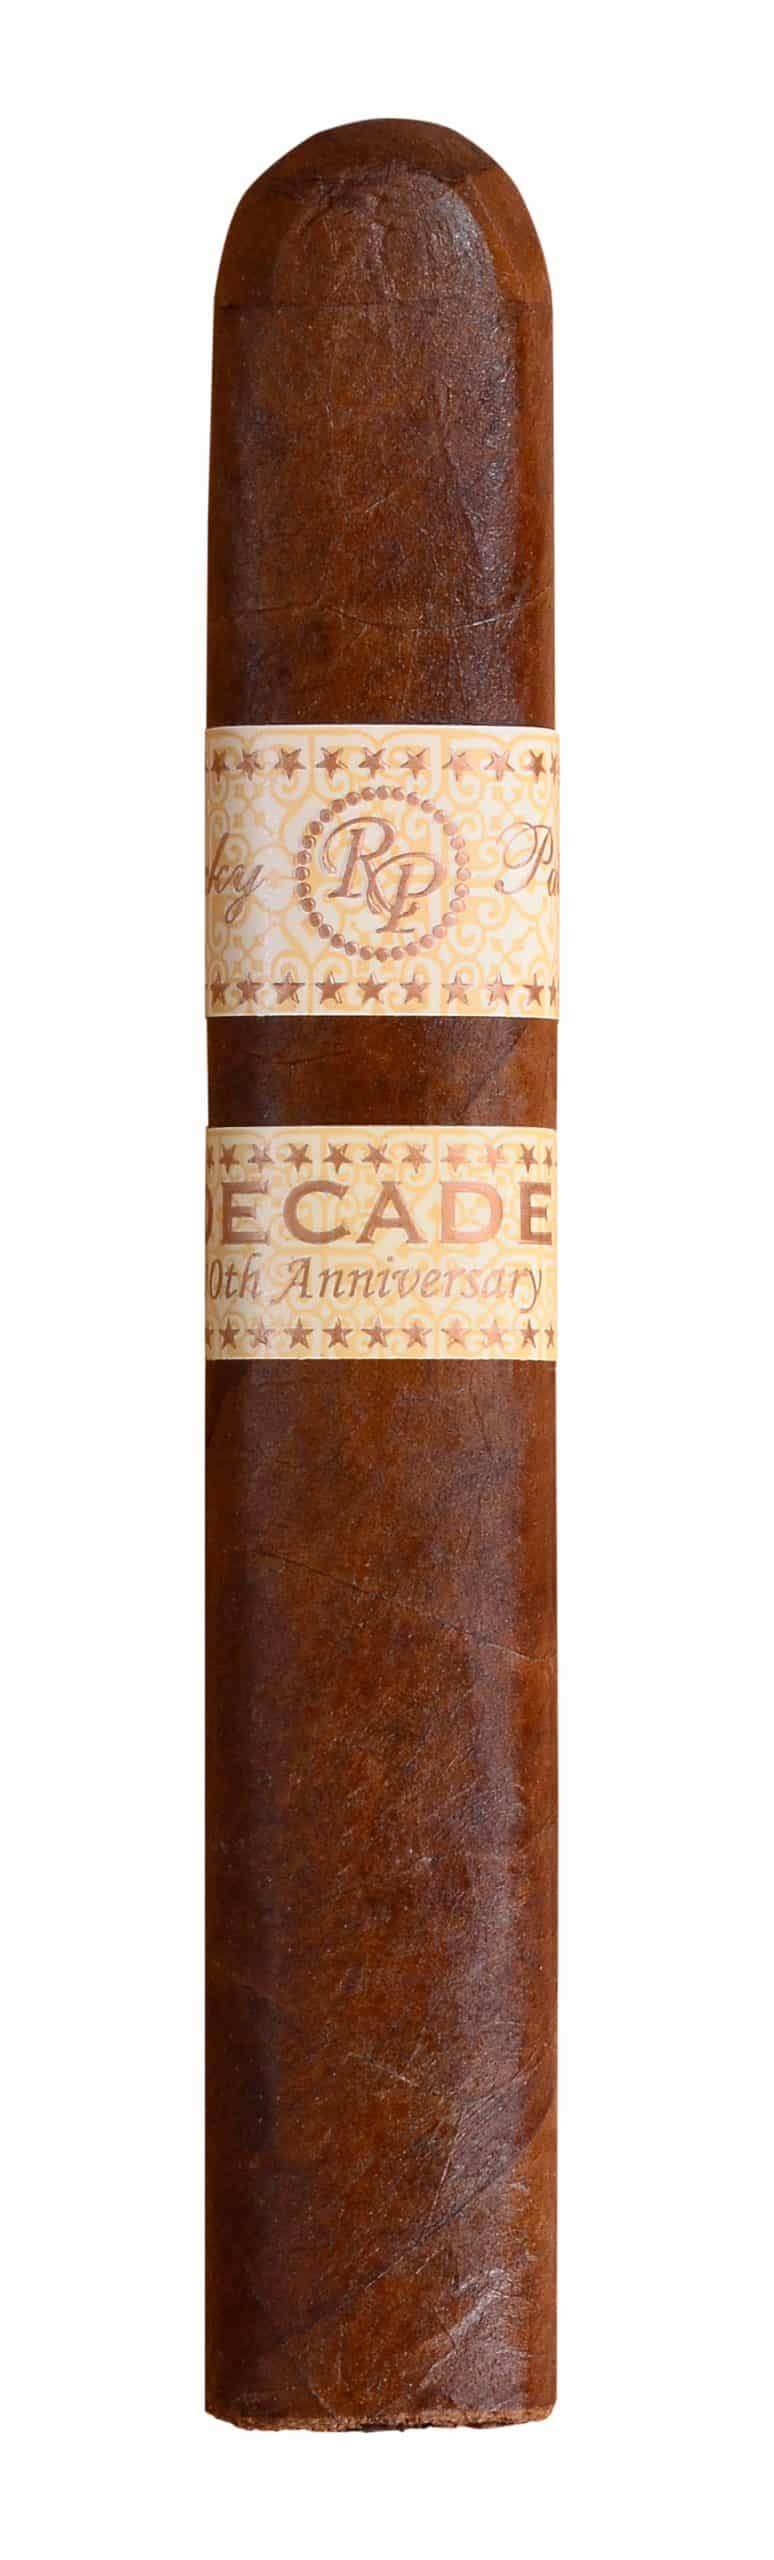 rocky patel decade robusto single cigar